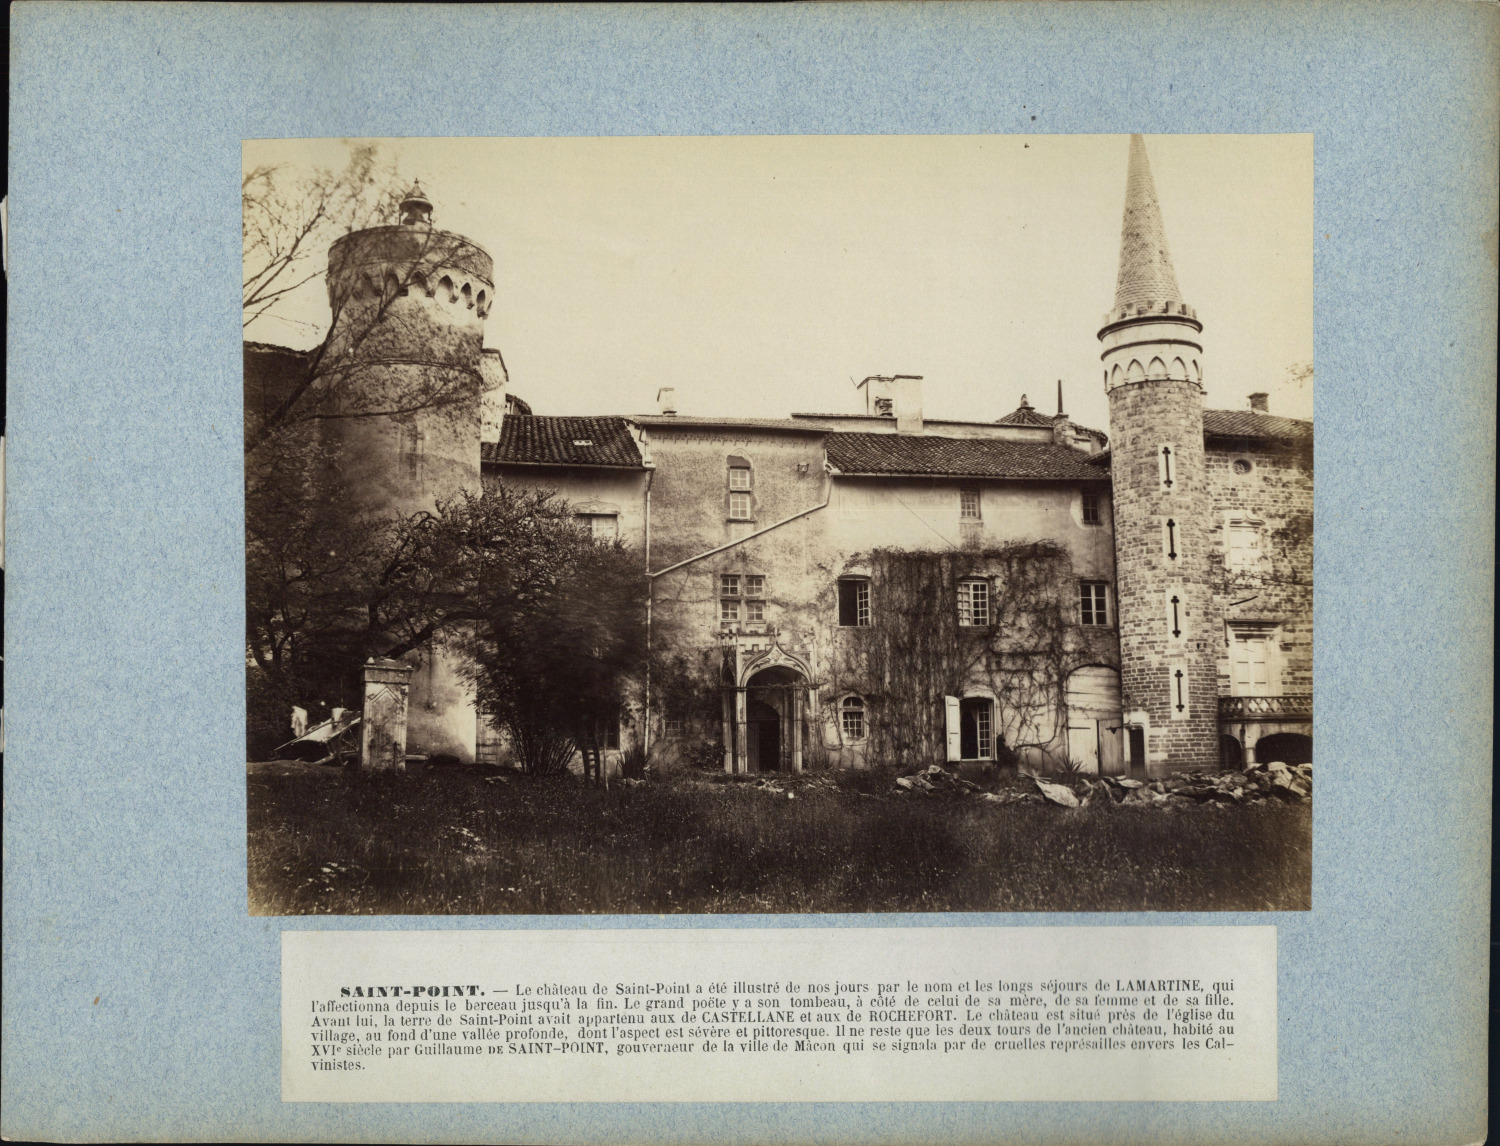 France, Saint-Point, Le Château vintage print. The castle welcomed Lamartine to